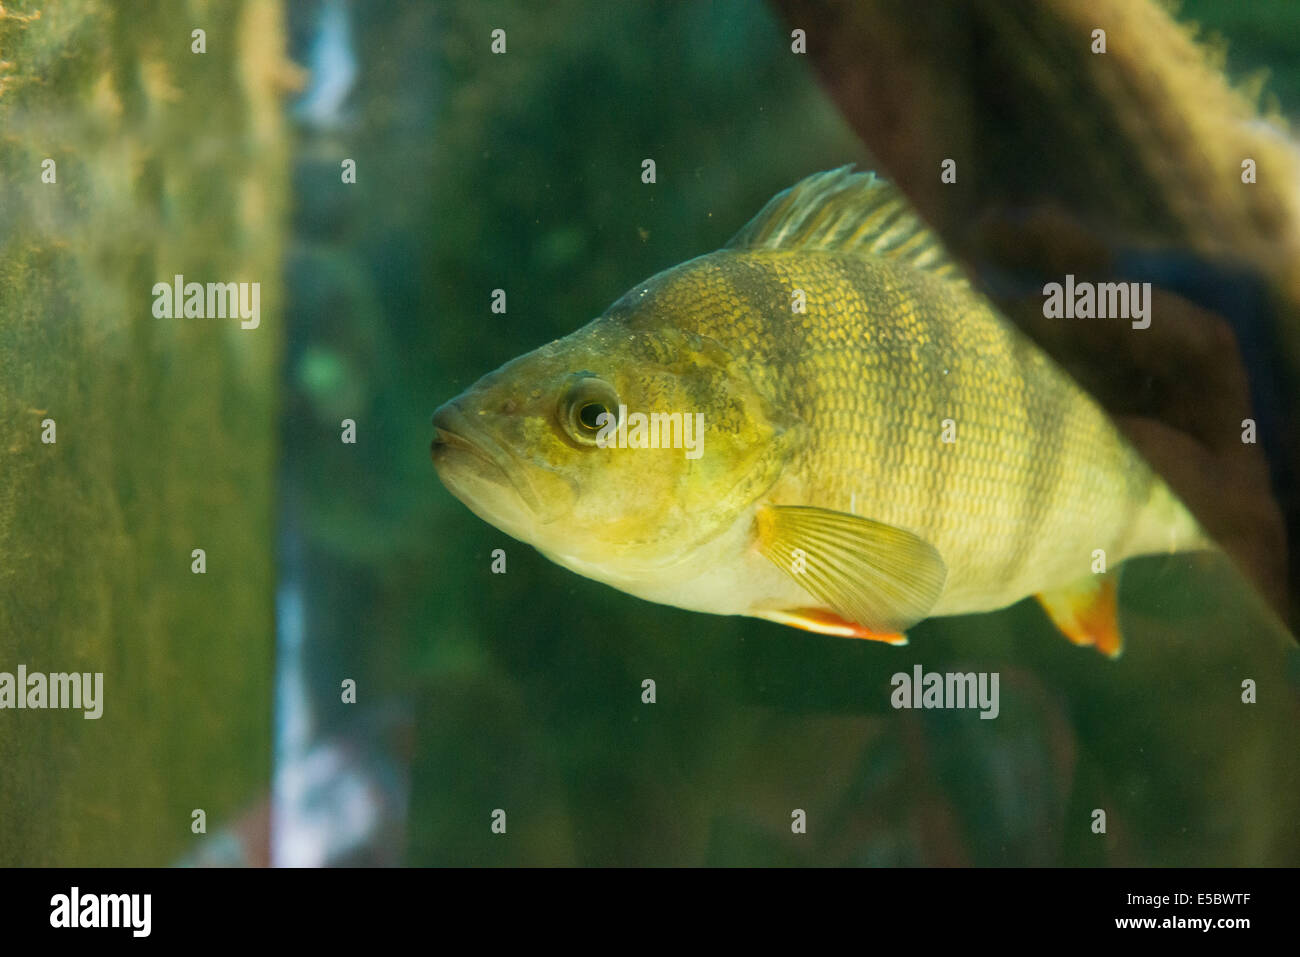 fresh water fish - Perch - Perca fluviatilis Stock Photo